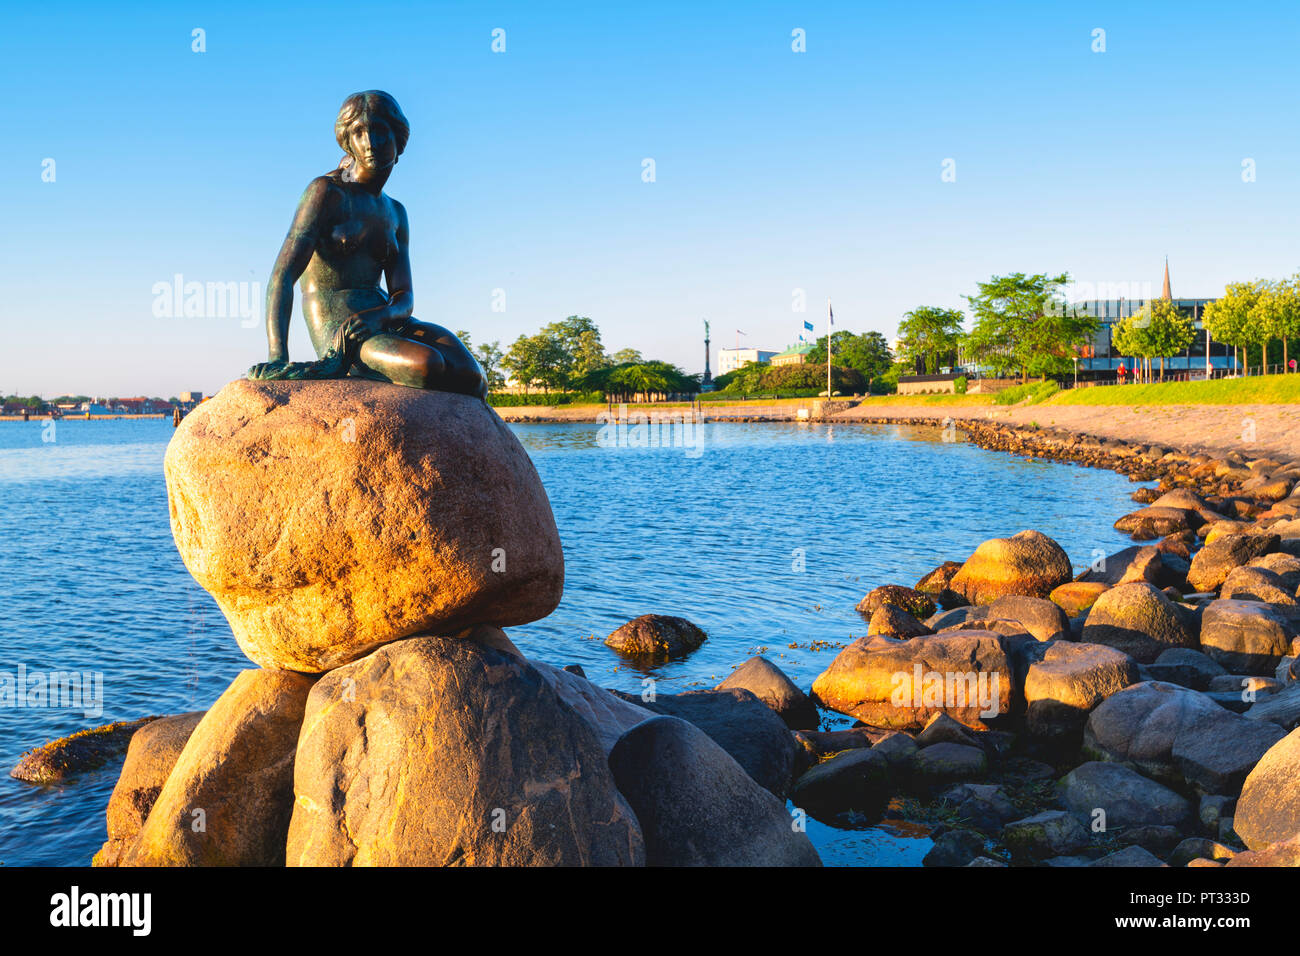 The Little Mermaid, Copenhagen, Hovedstaden, Denmark, Northern Europe, Stock Photo